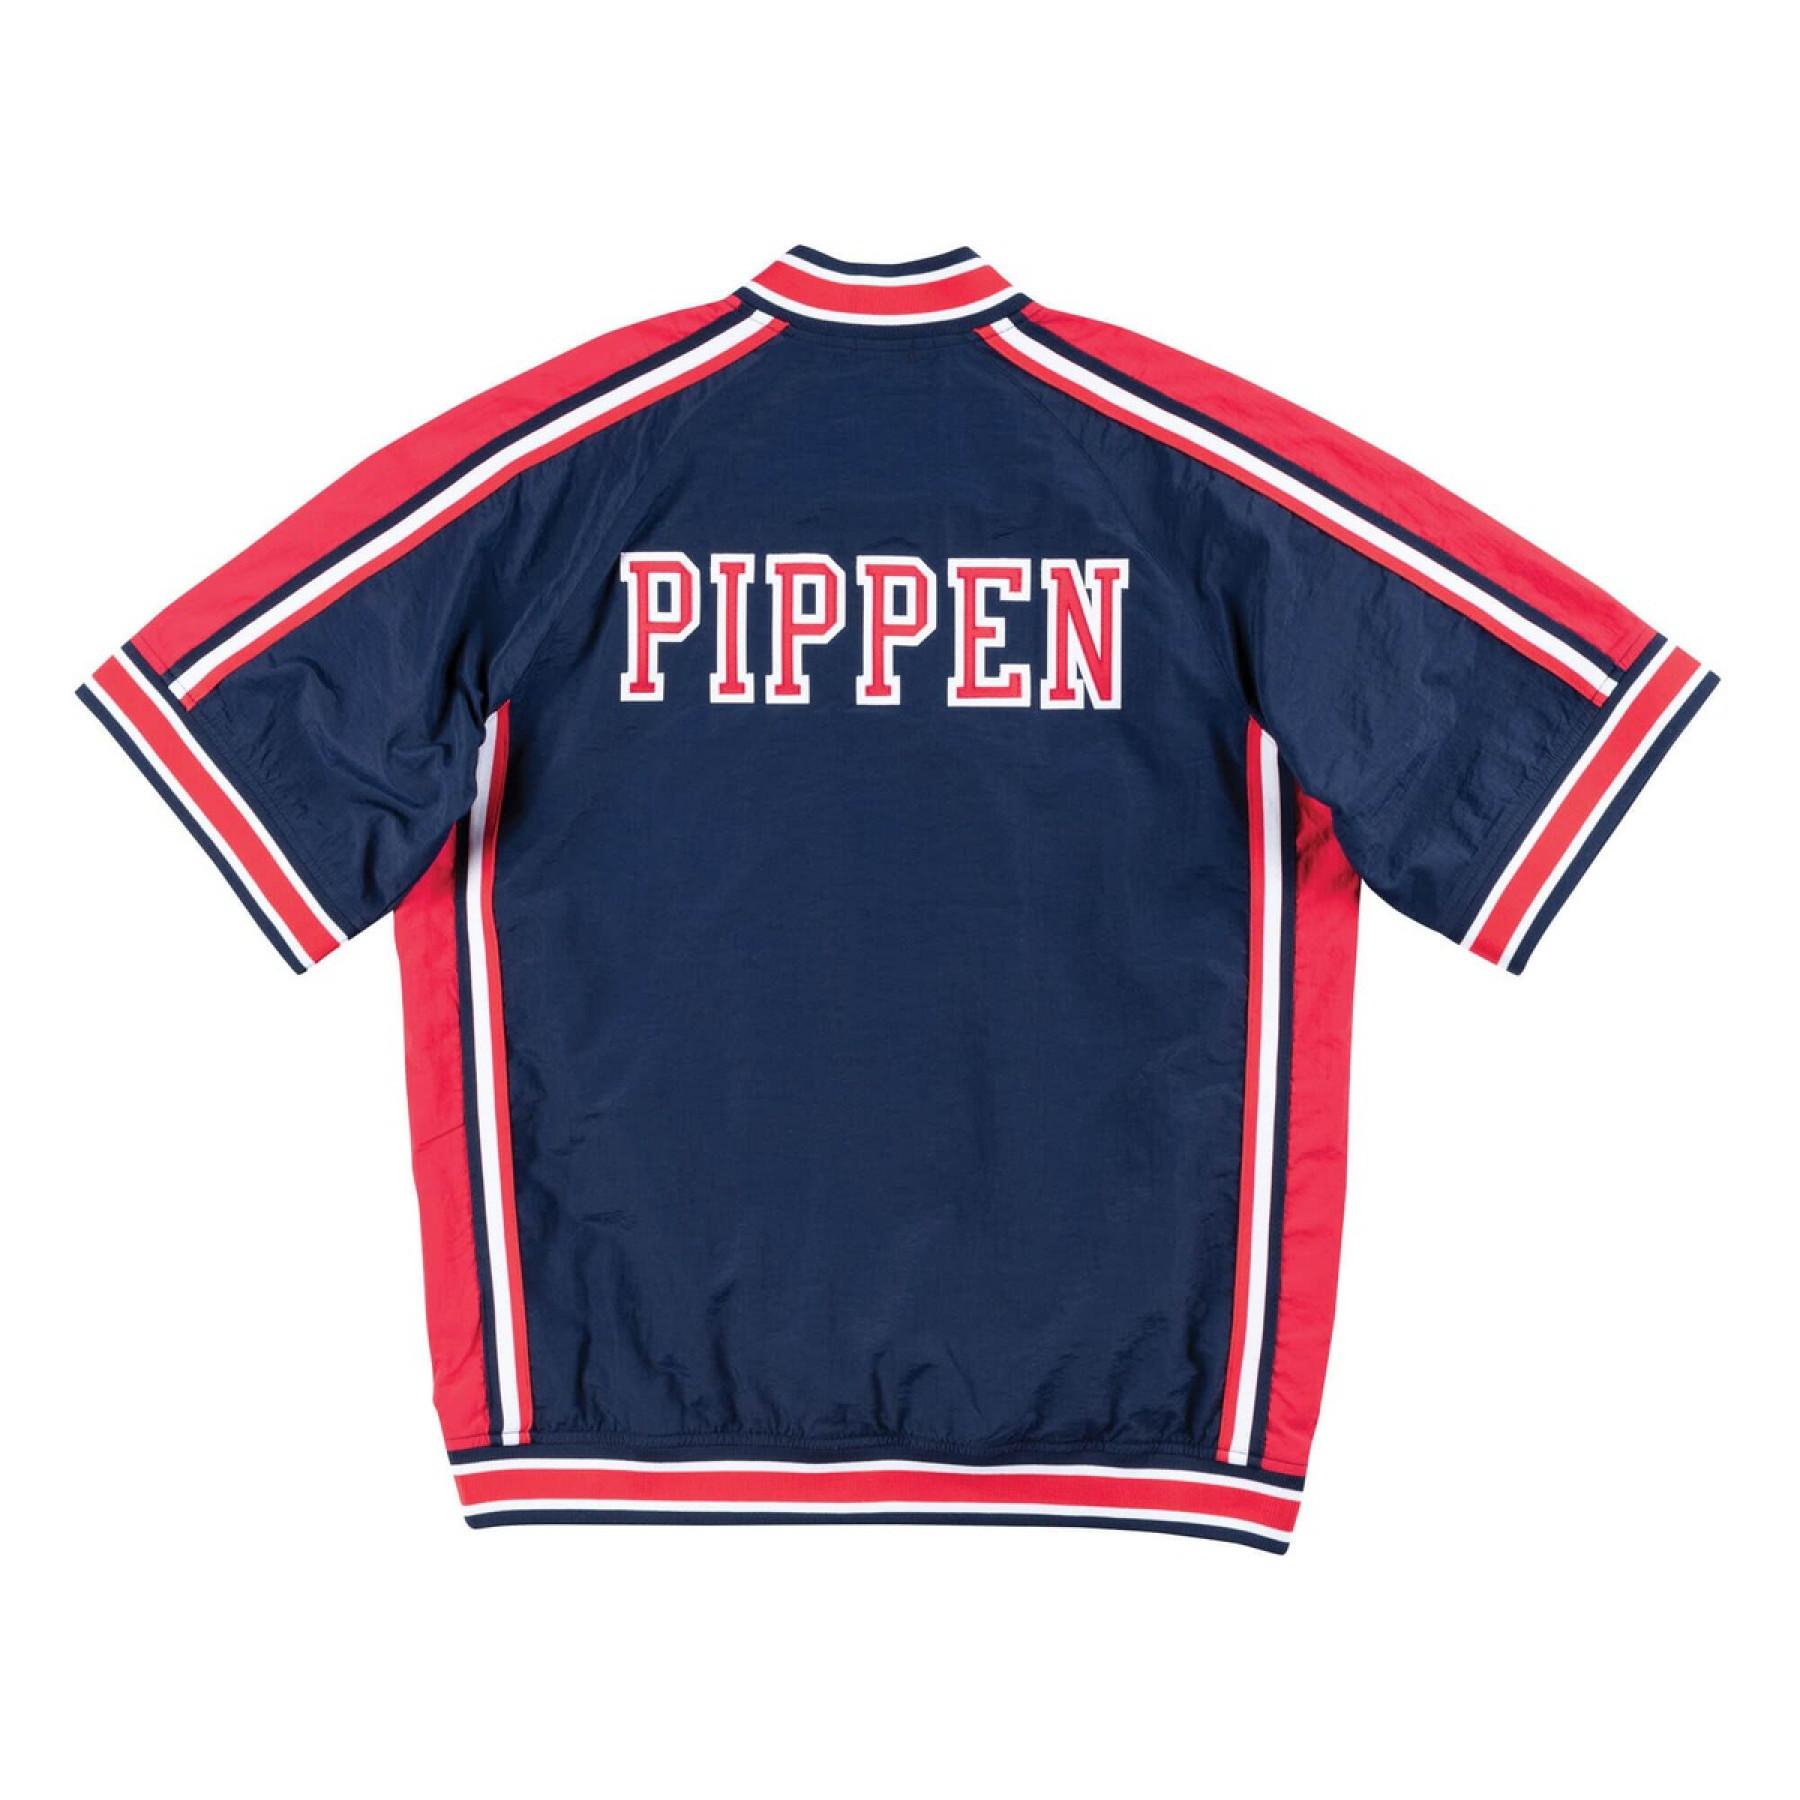 Veste Team USA authentic Scottie Pippen